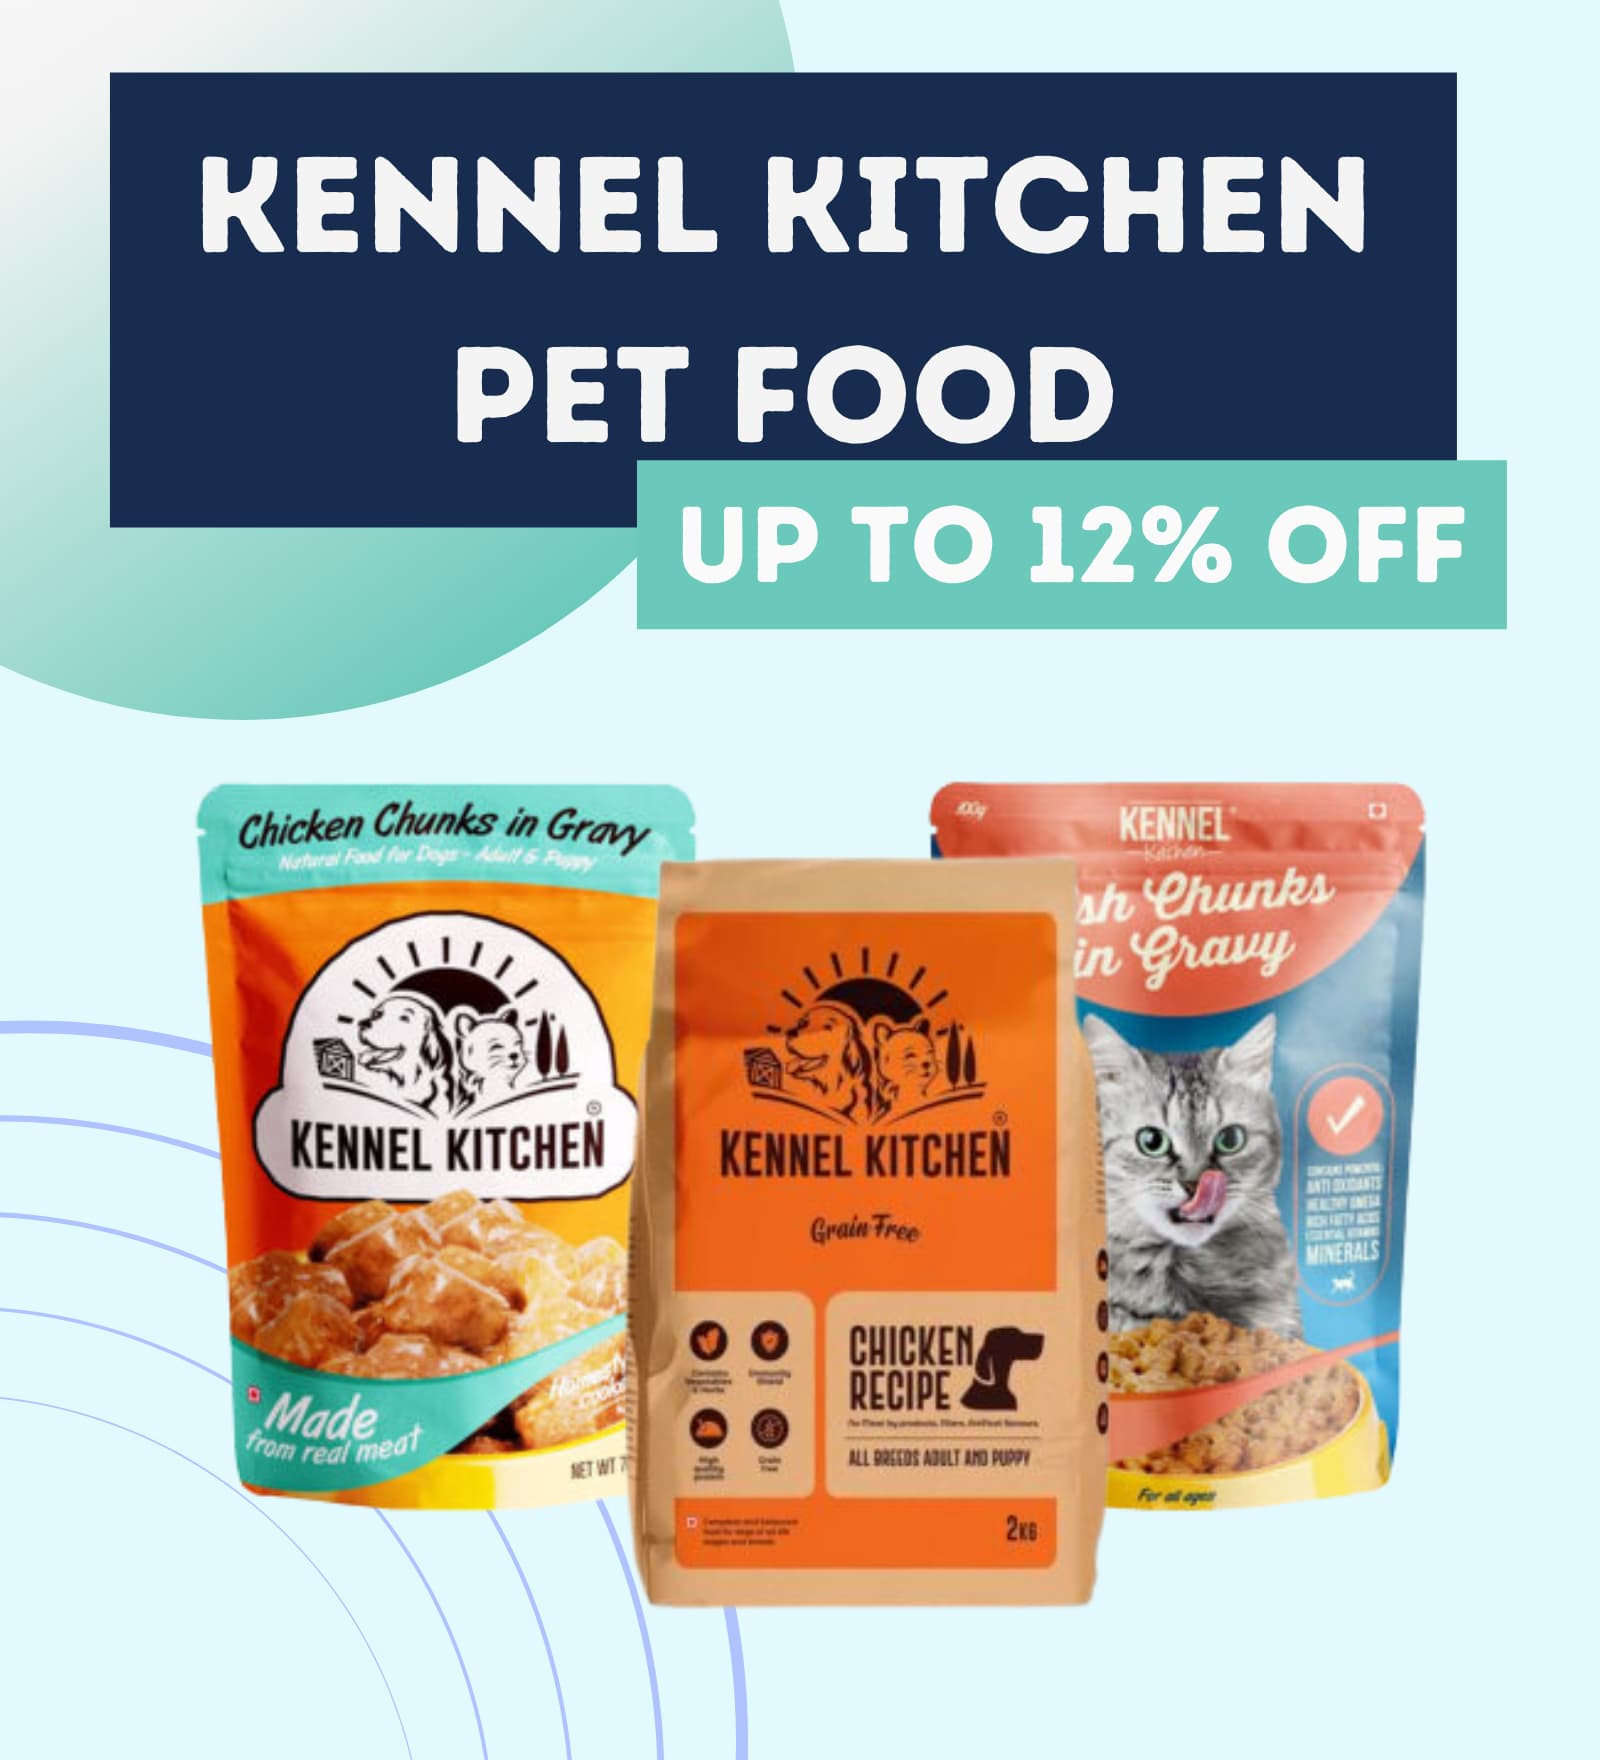 deal on kennel kitchen pet food- upto 12% off